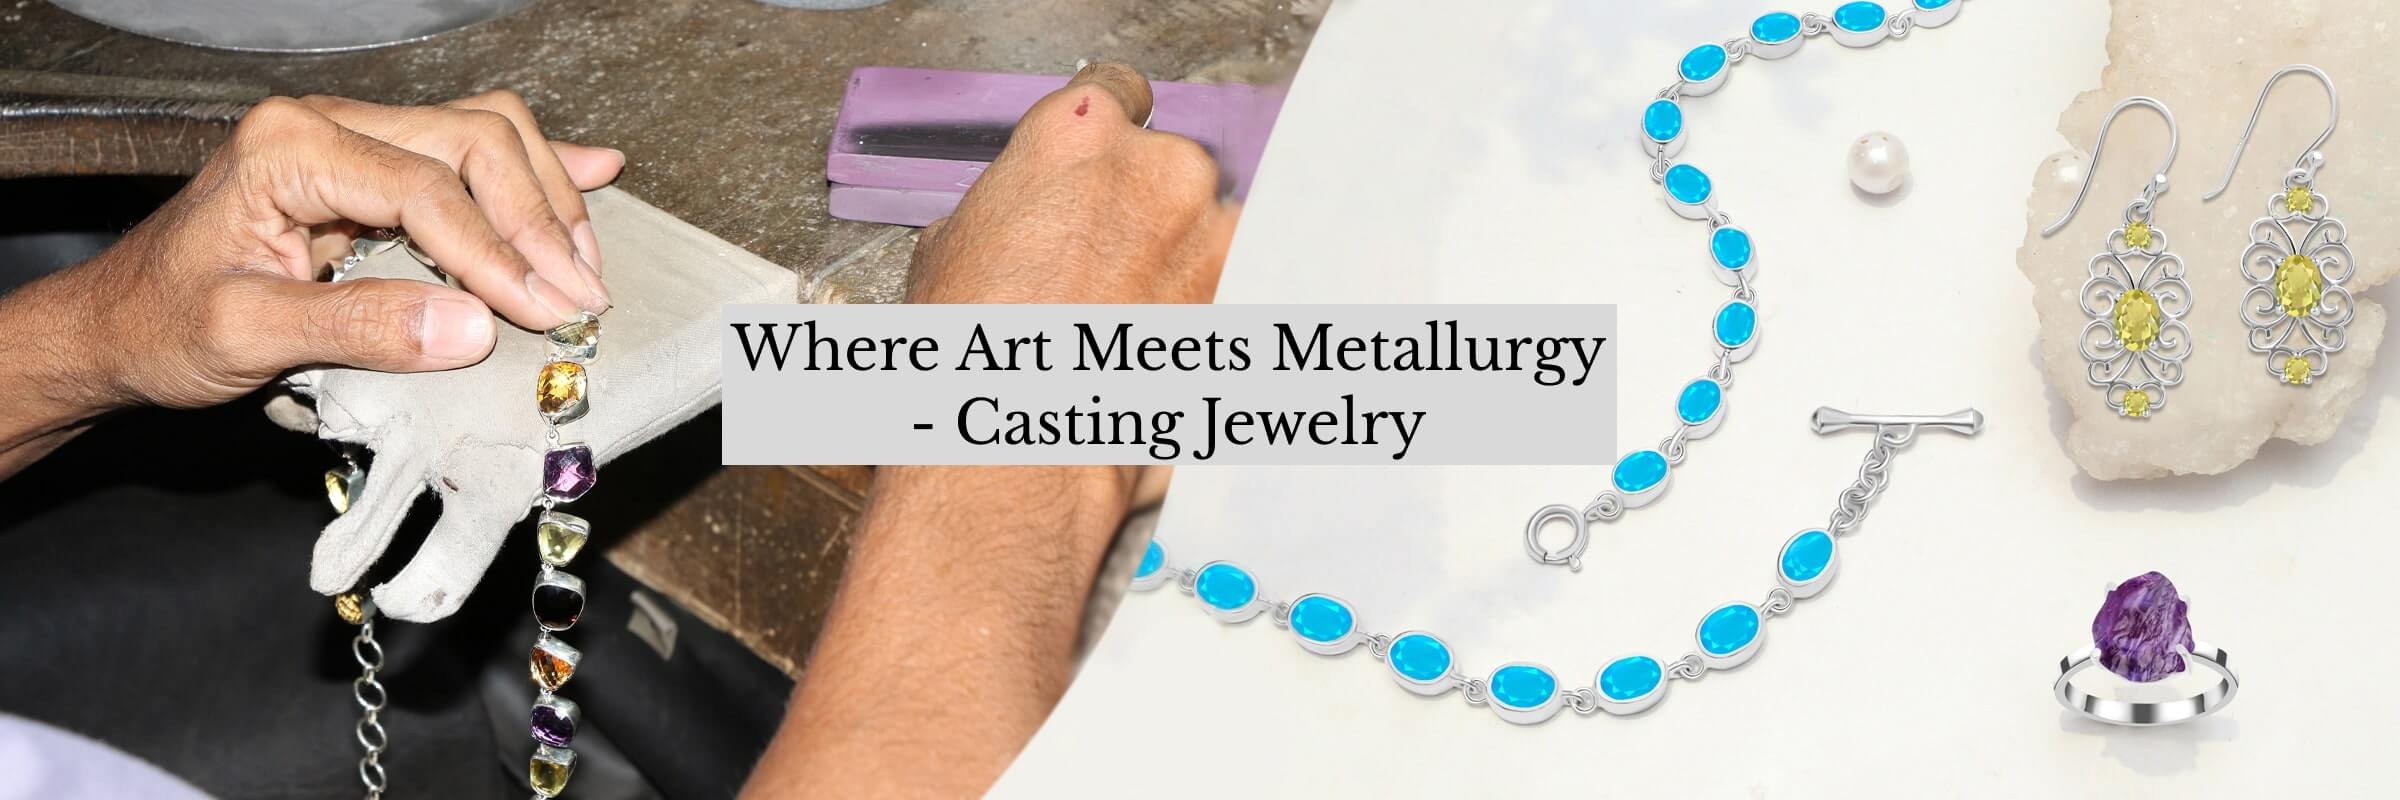 Casting Jewelry Process